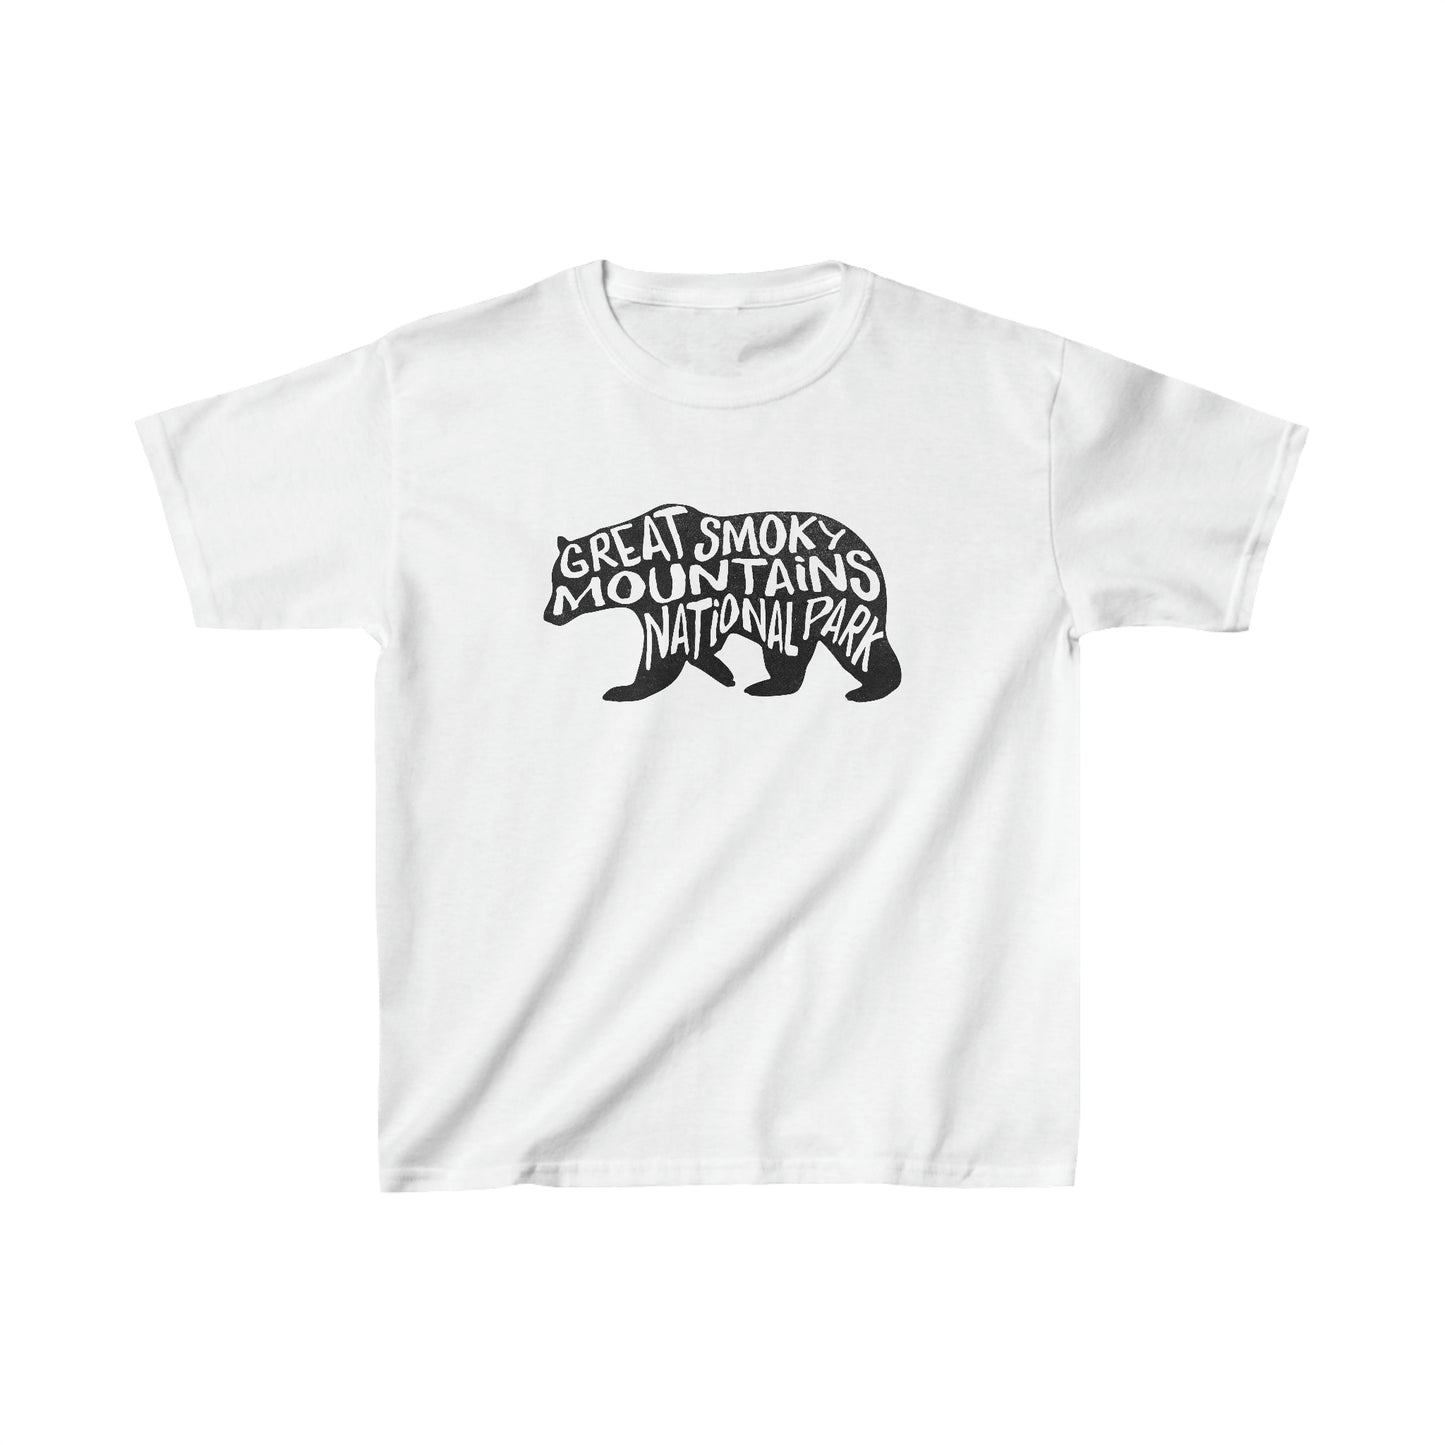 Great Smoky Mountains National Park Child T-Shirt - Black Bear Chunky Text